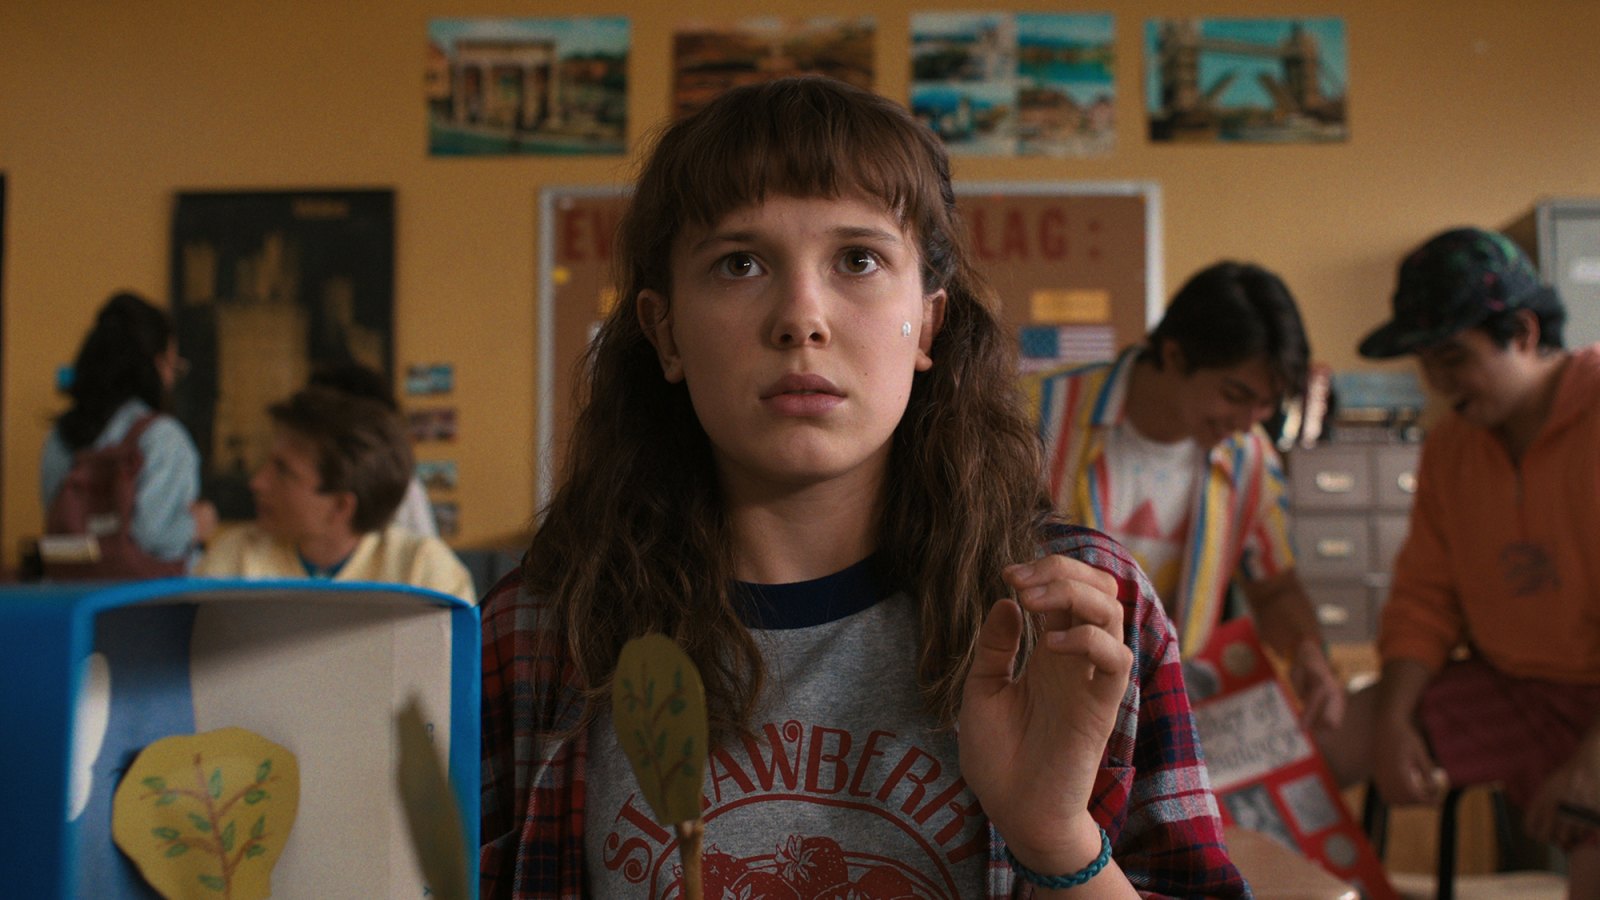 Netflix Puts Warning on 1st Episode of Stranger Things Season 4 After Texas School Shooting